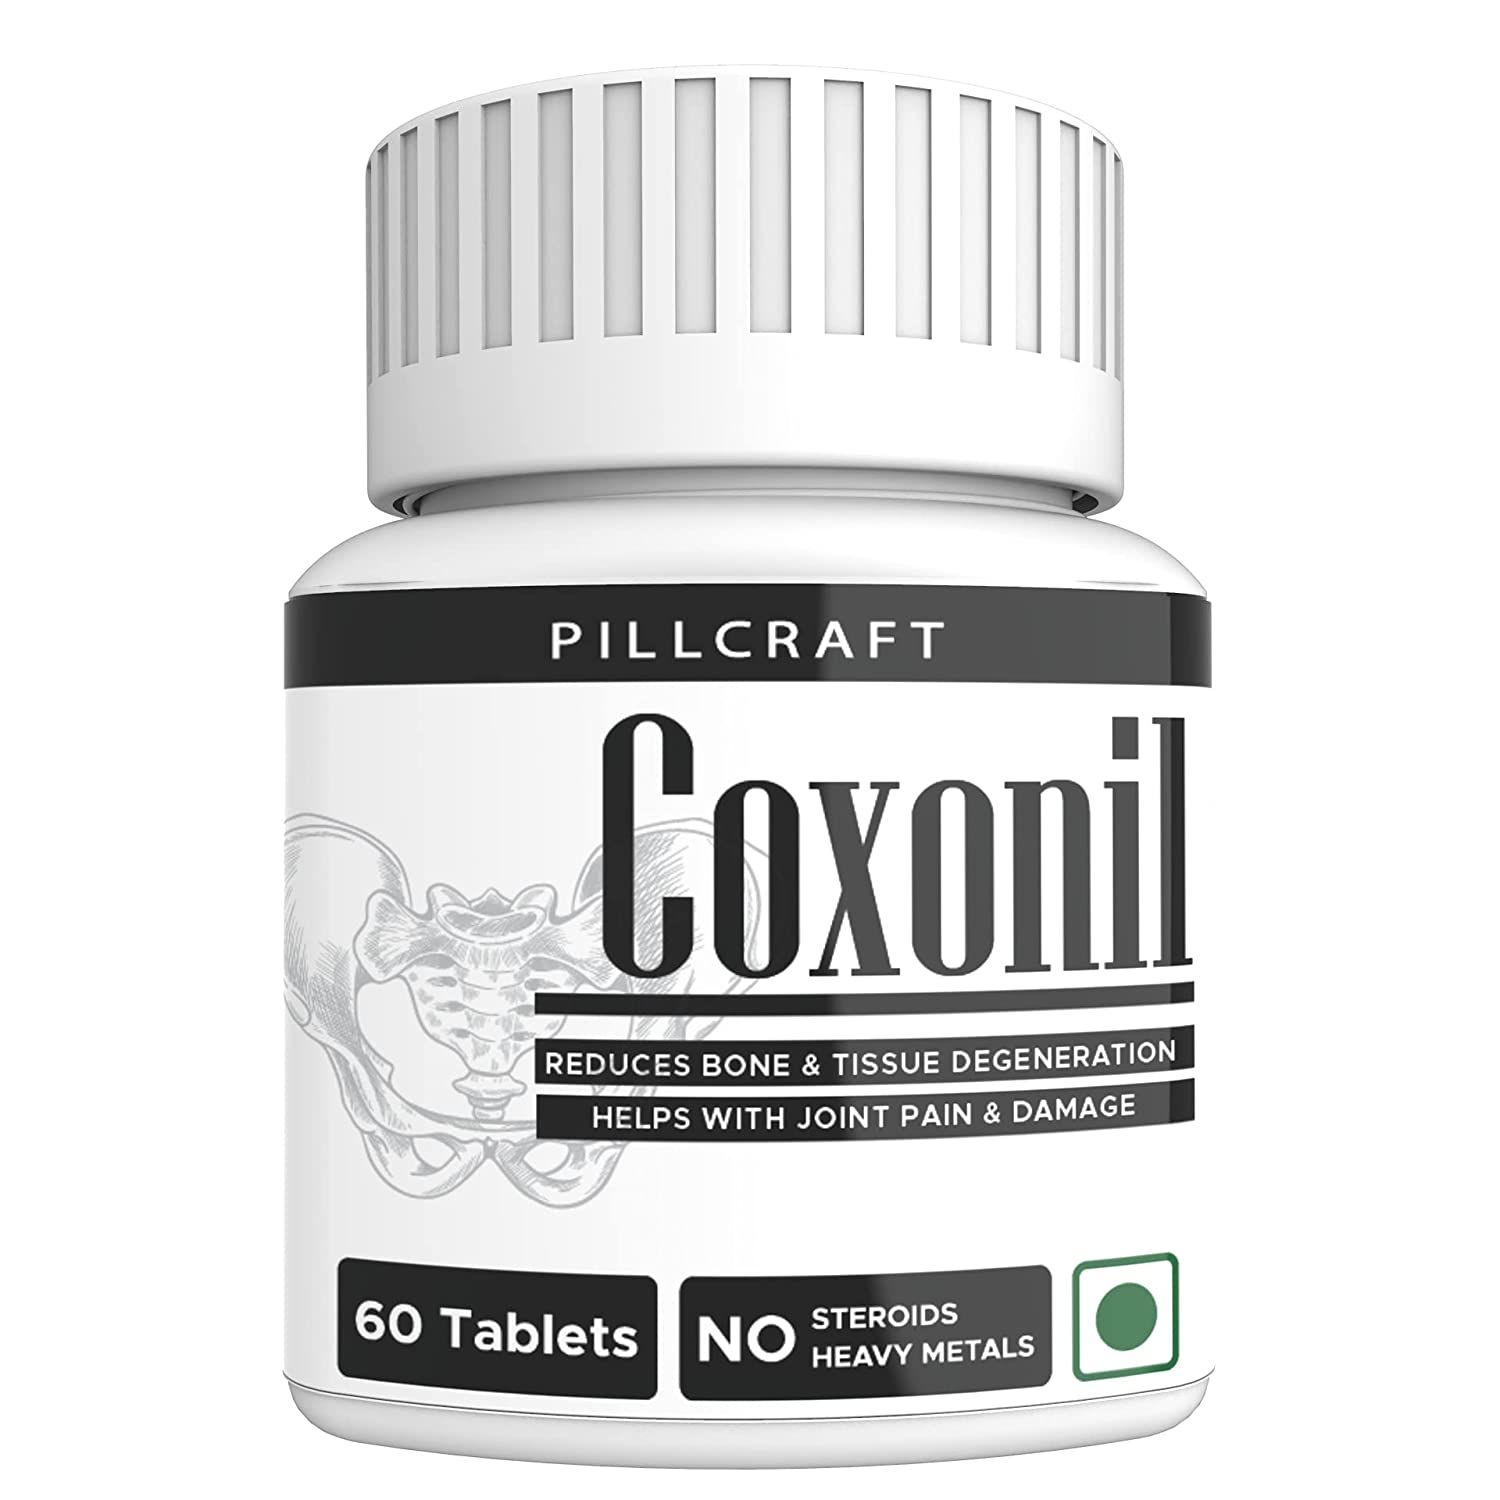 Pillcraft Coxonil Tablets Image